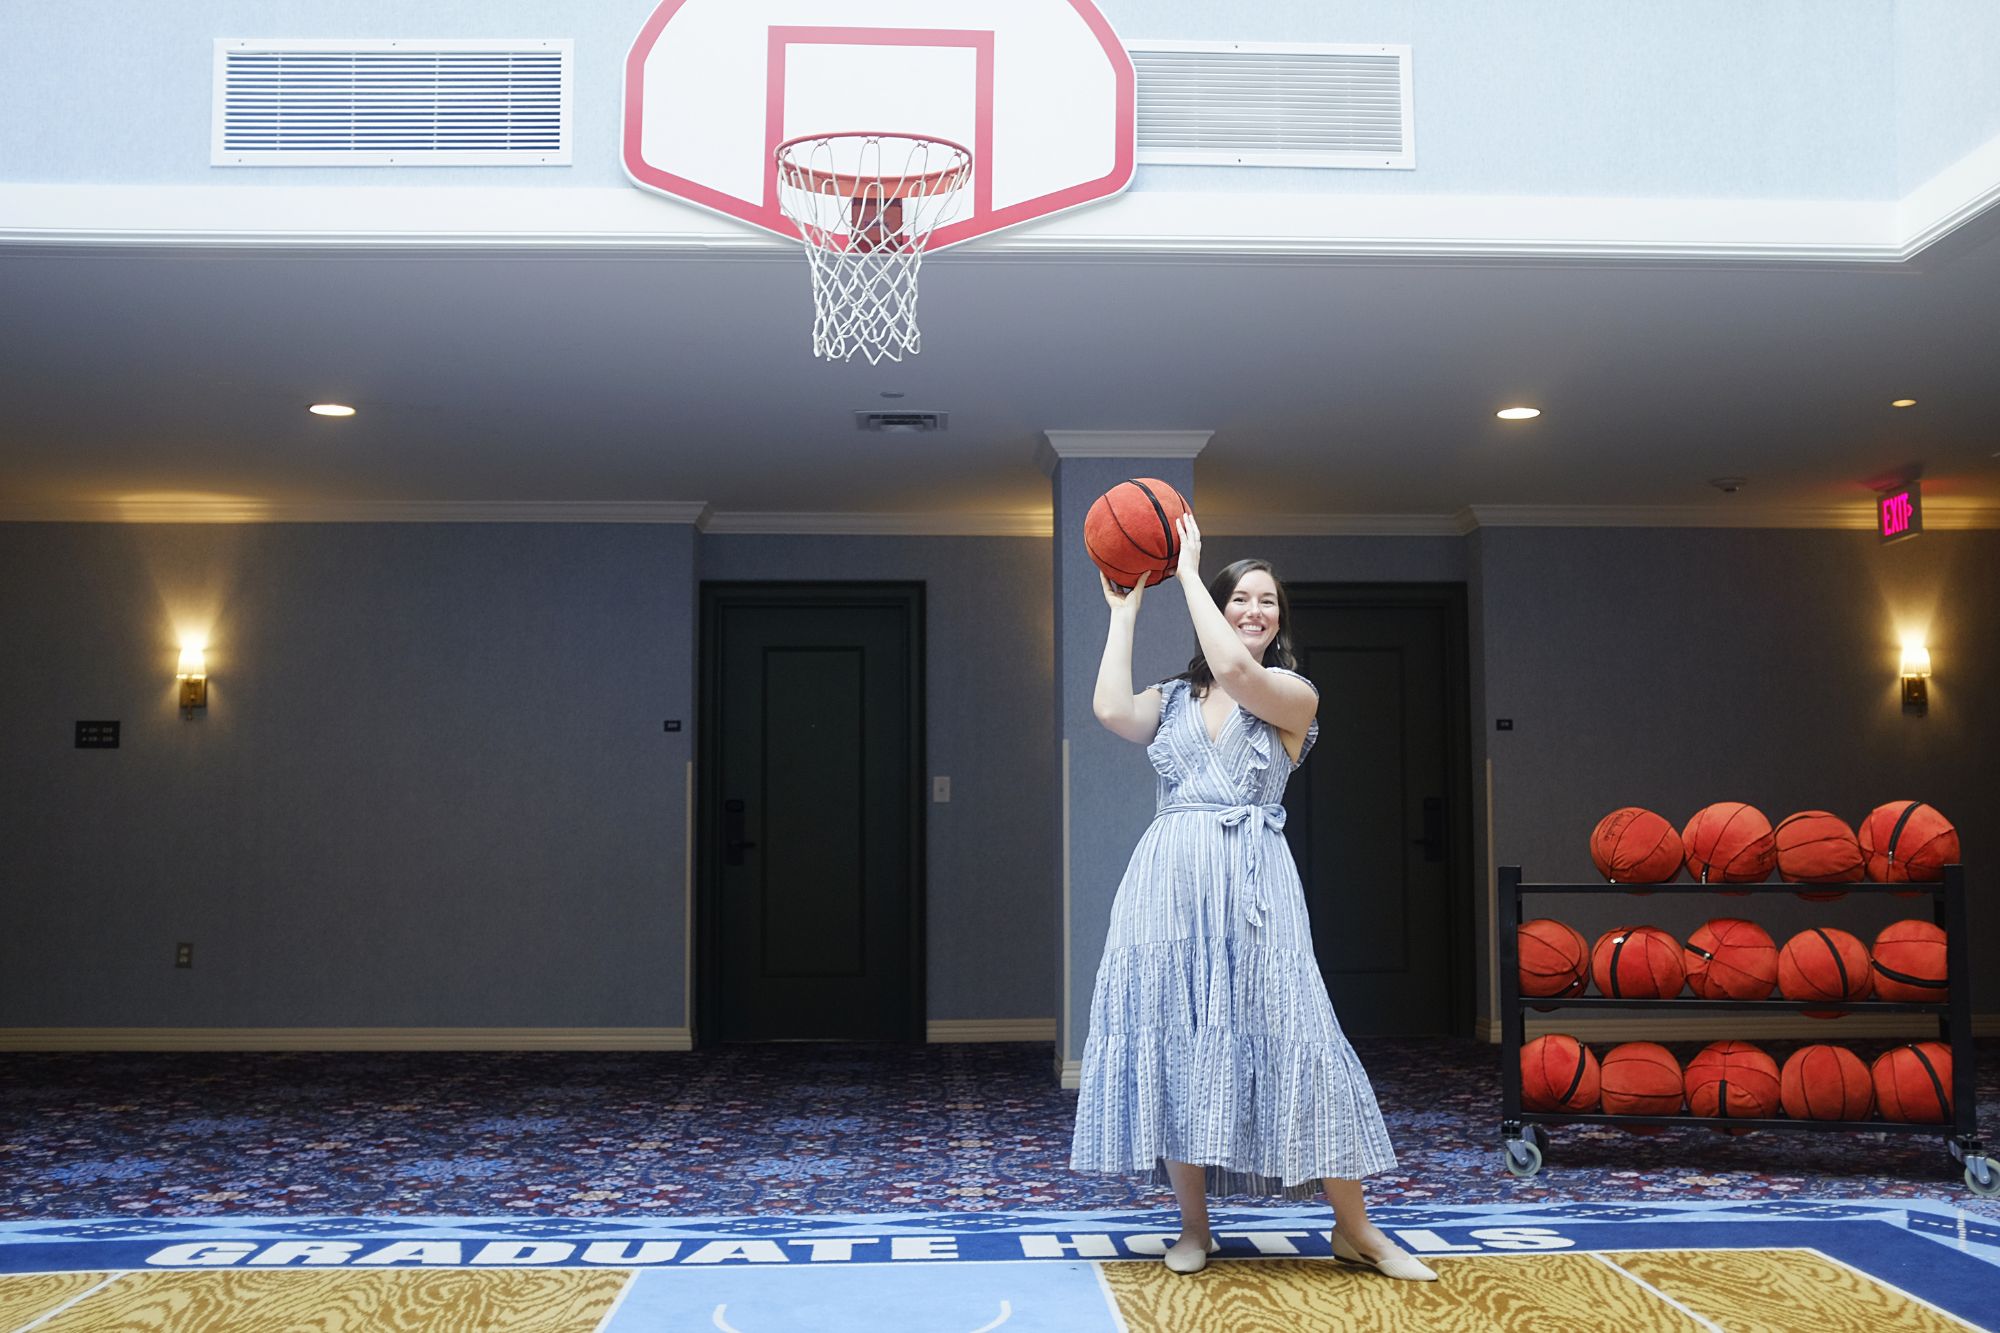 Alyssa shoots a plush basketball